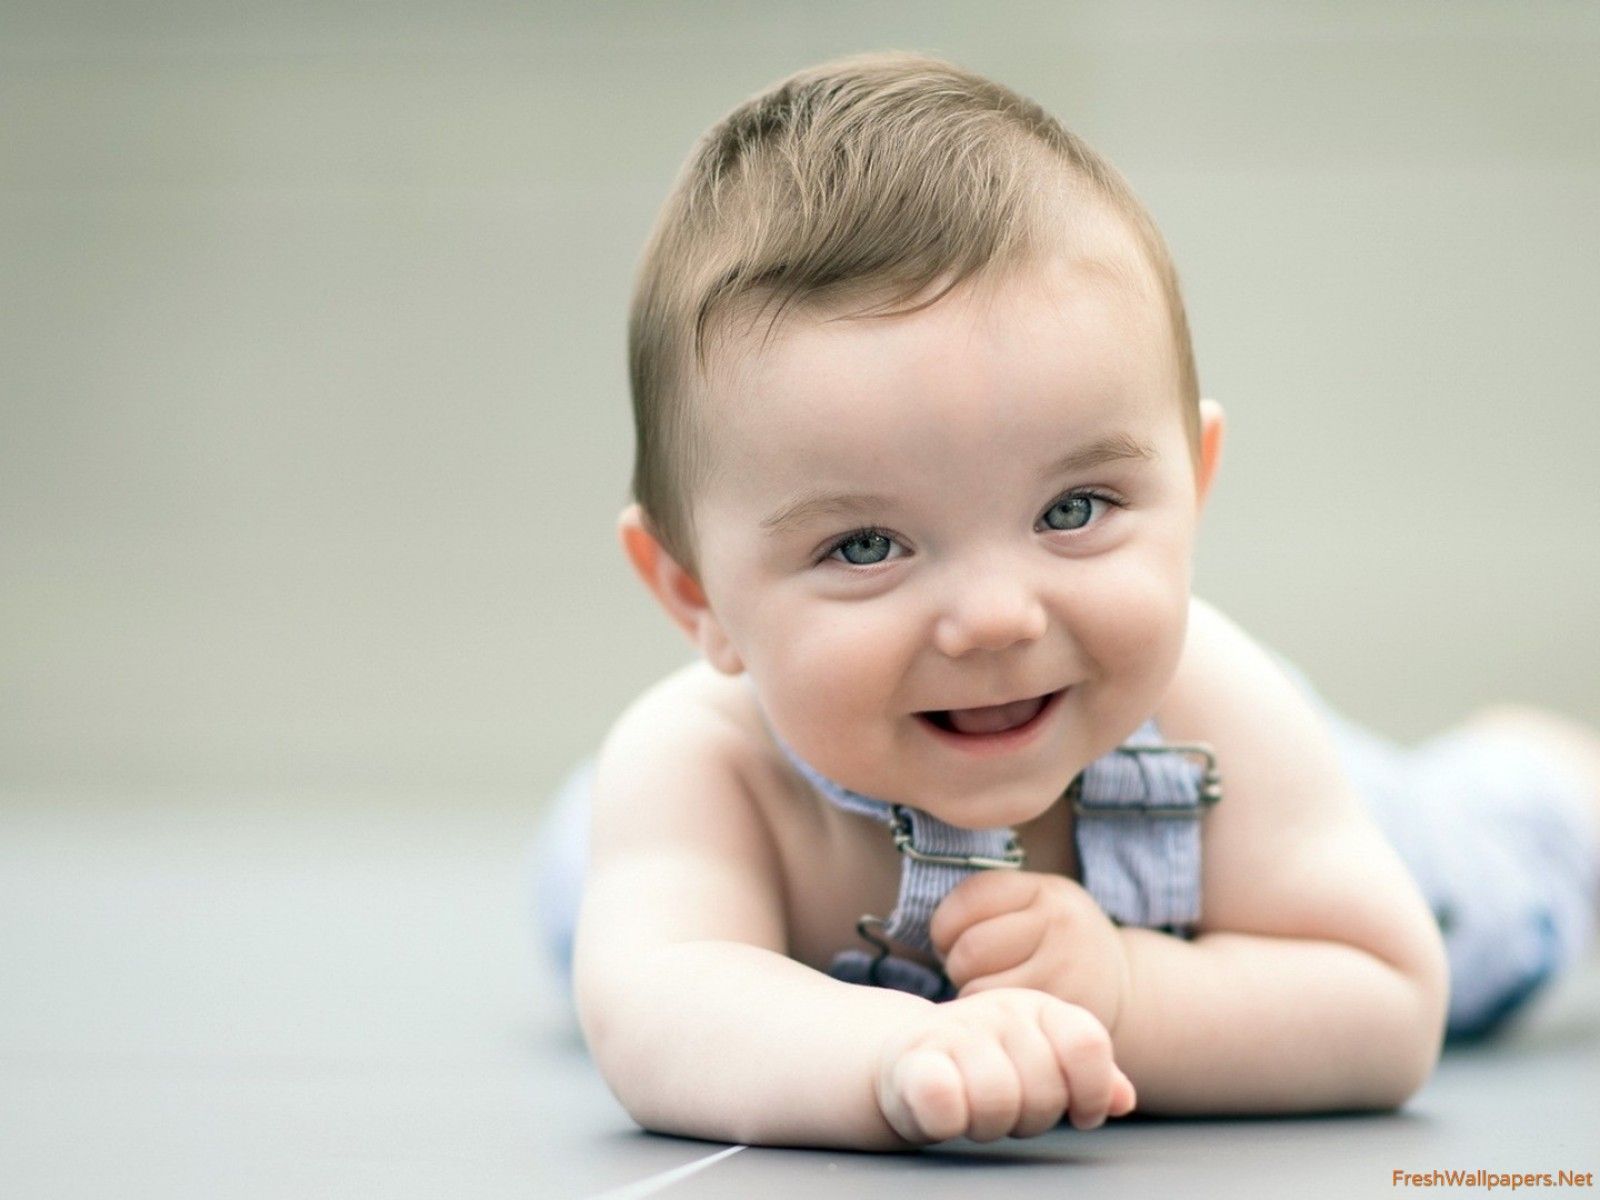 Cute Baby Boy wallpaper Freshwallpaper. Baby boy picture, Cute baby boy image, Cute baby wallpaper